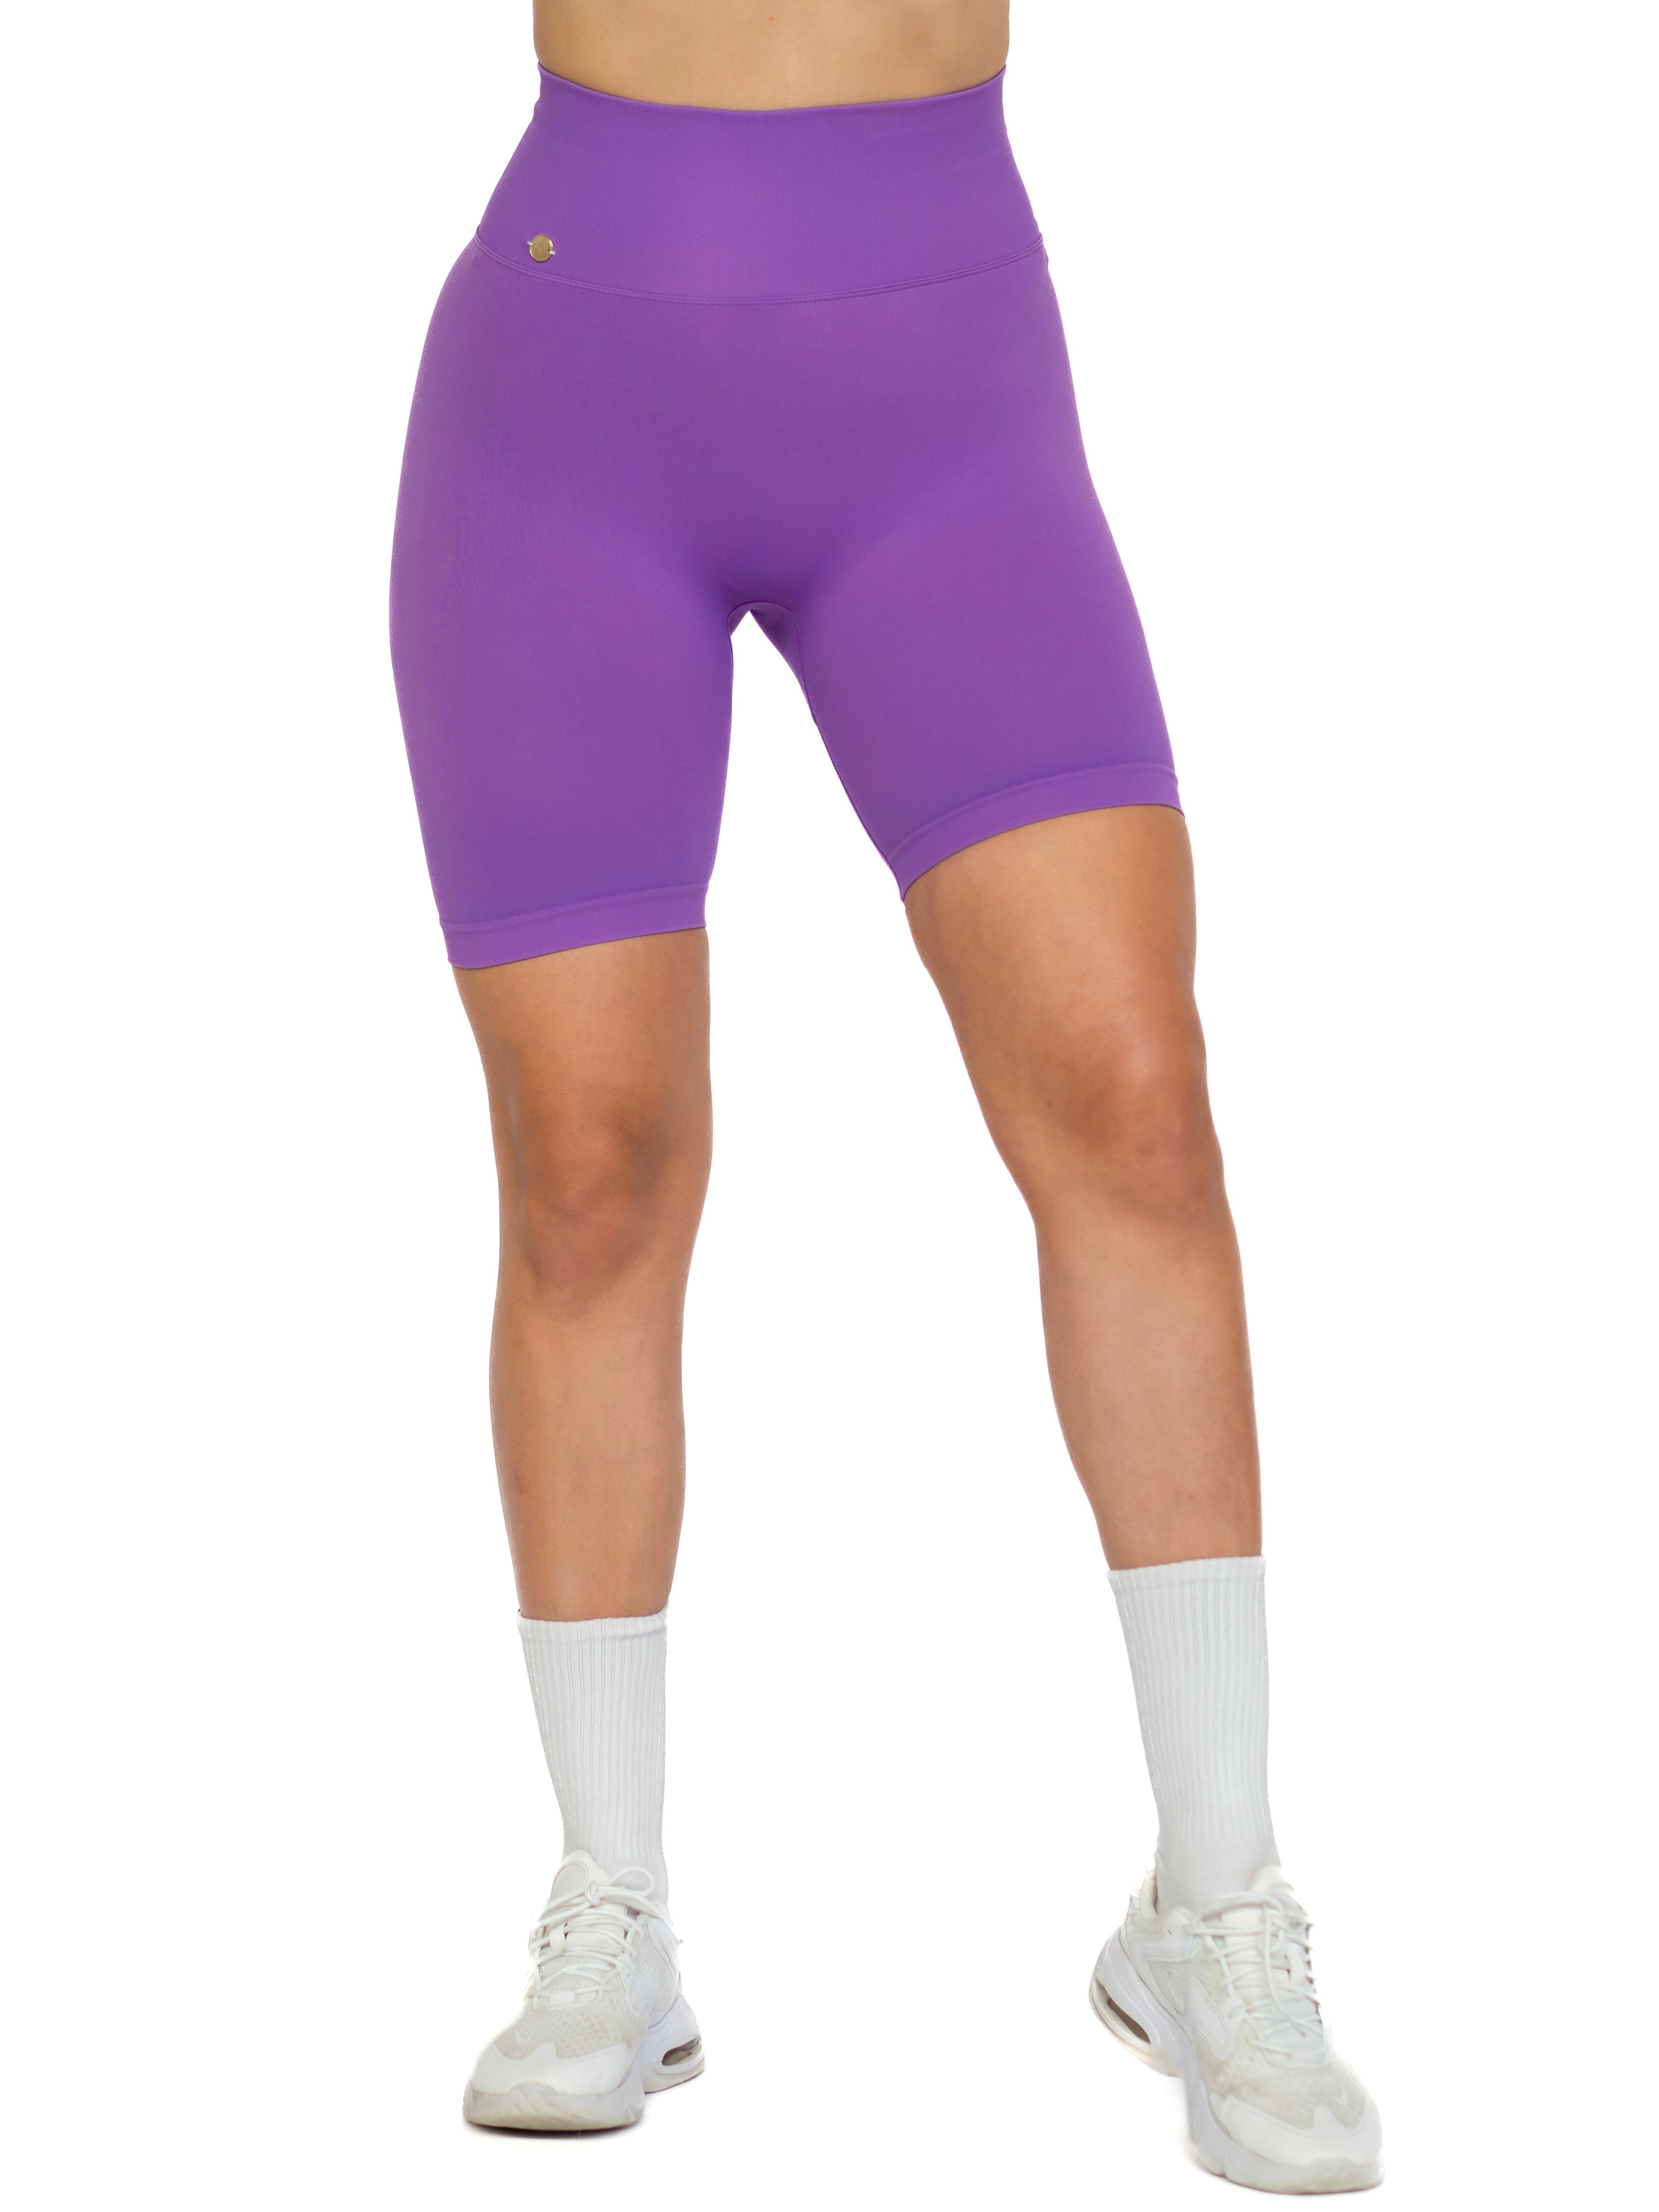 Perfect Peachy Biker Shorts - Bright Purple